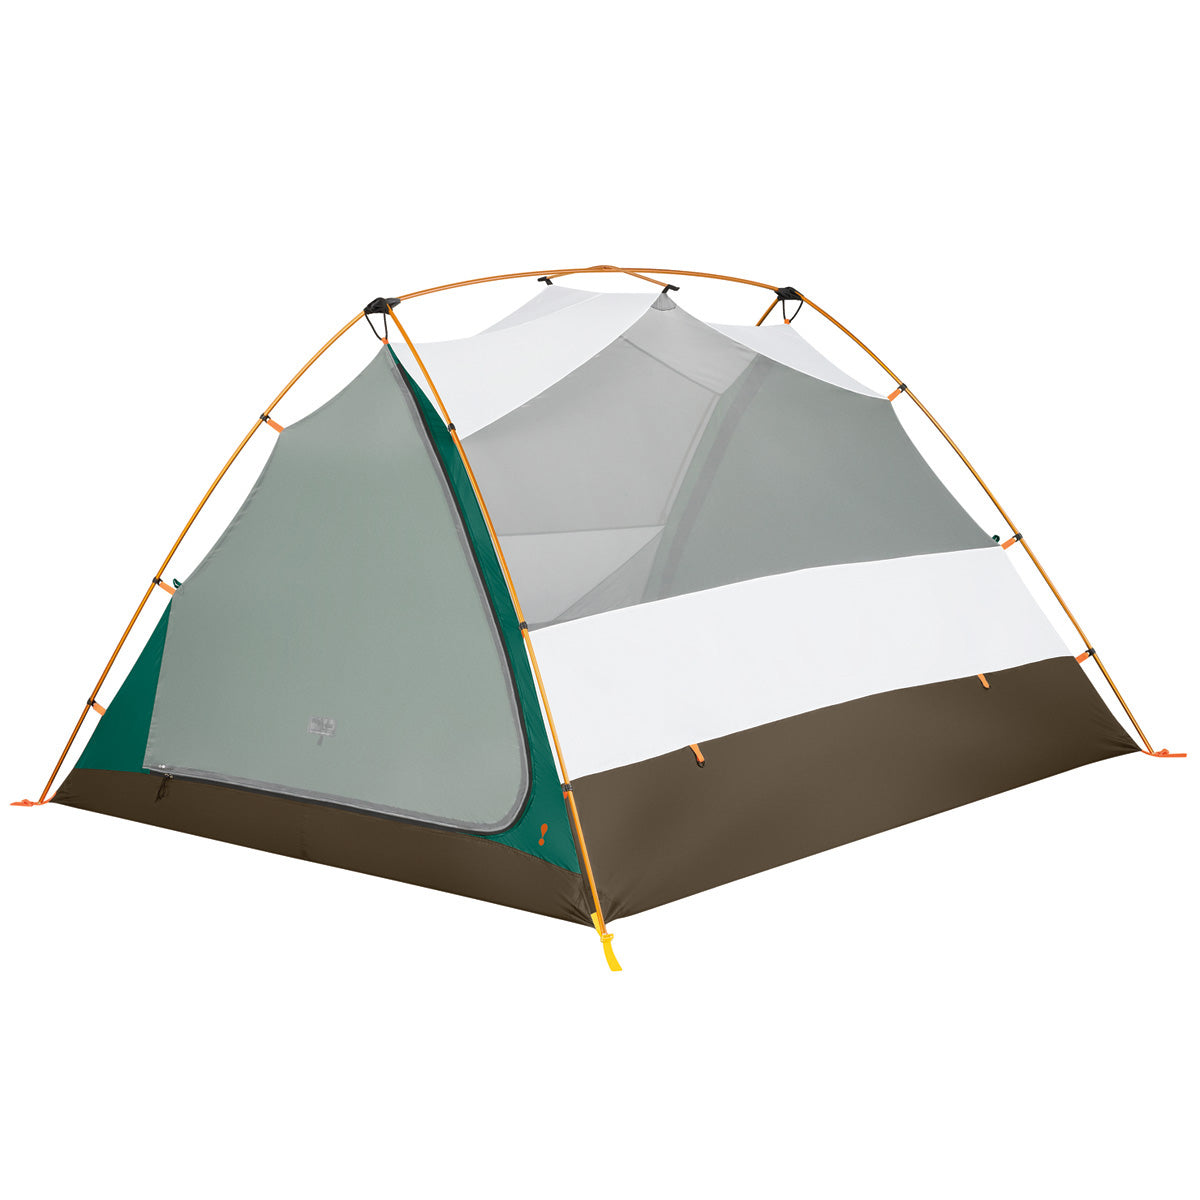 Eureka Timberline SQ 2XT 3 season two person backpacking tent main